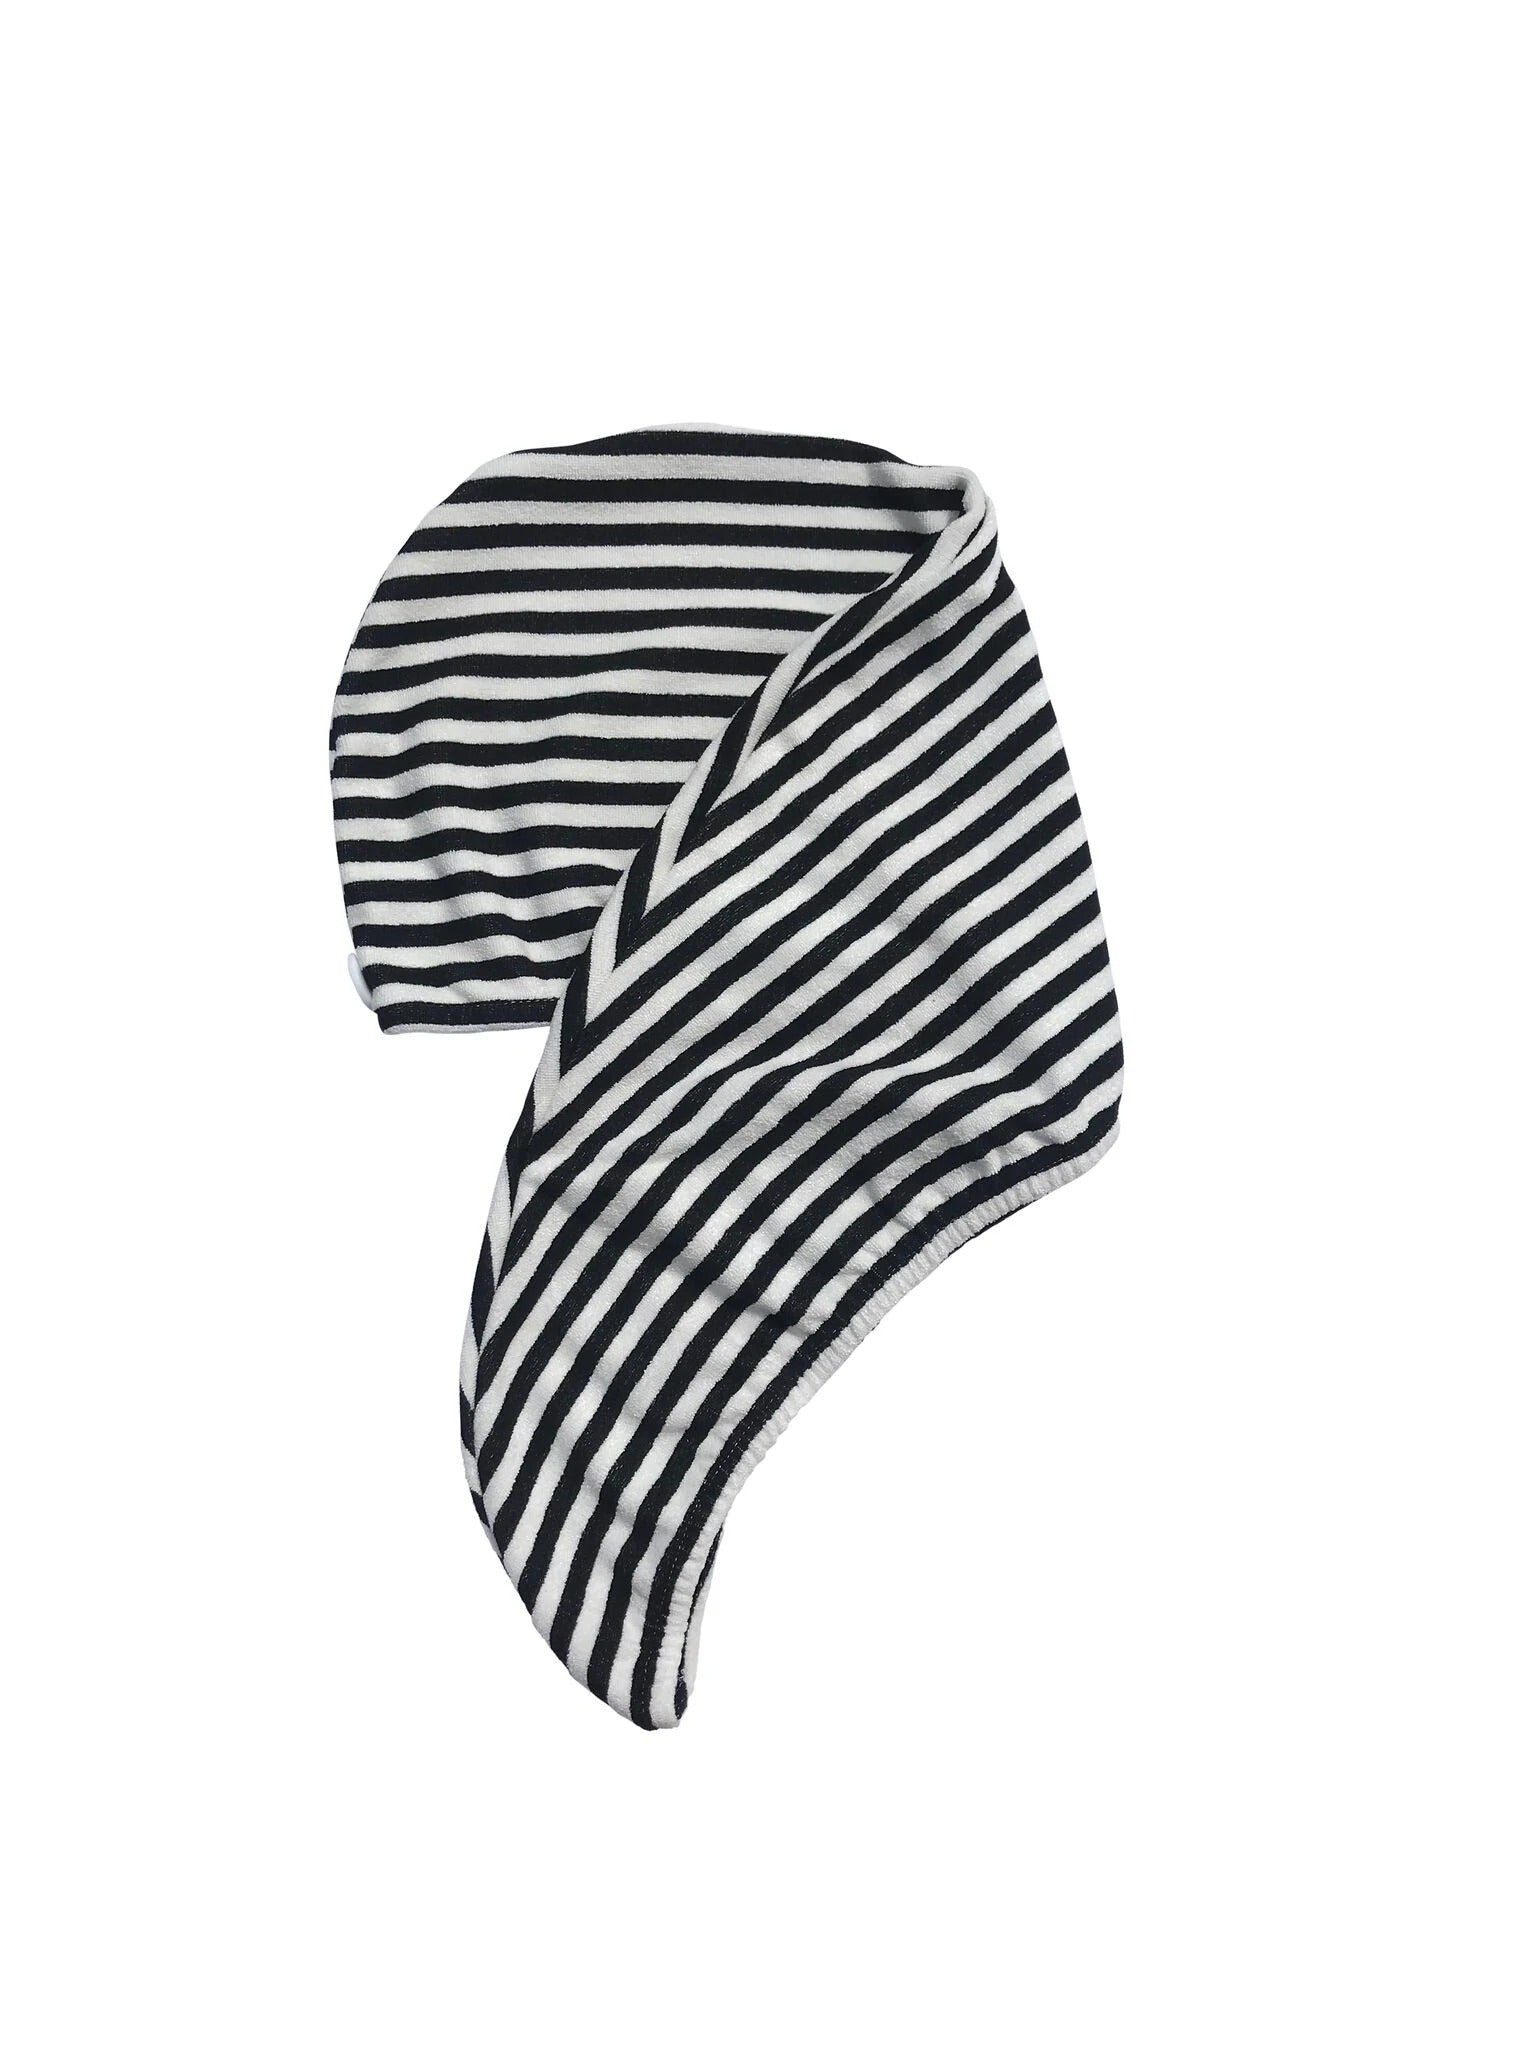 Louvelle RIVA Hair Towel Wrap in Monochrome Stripe